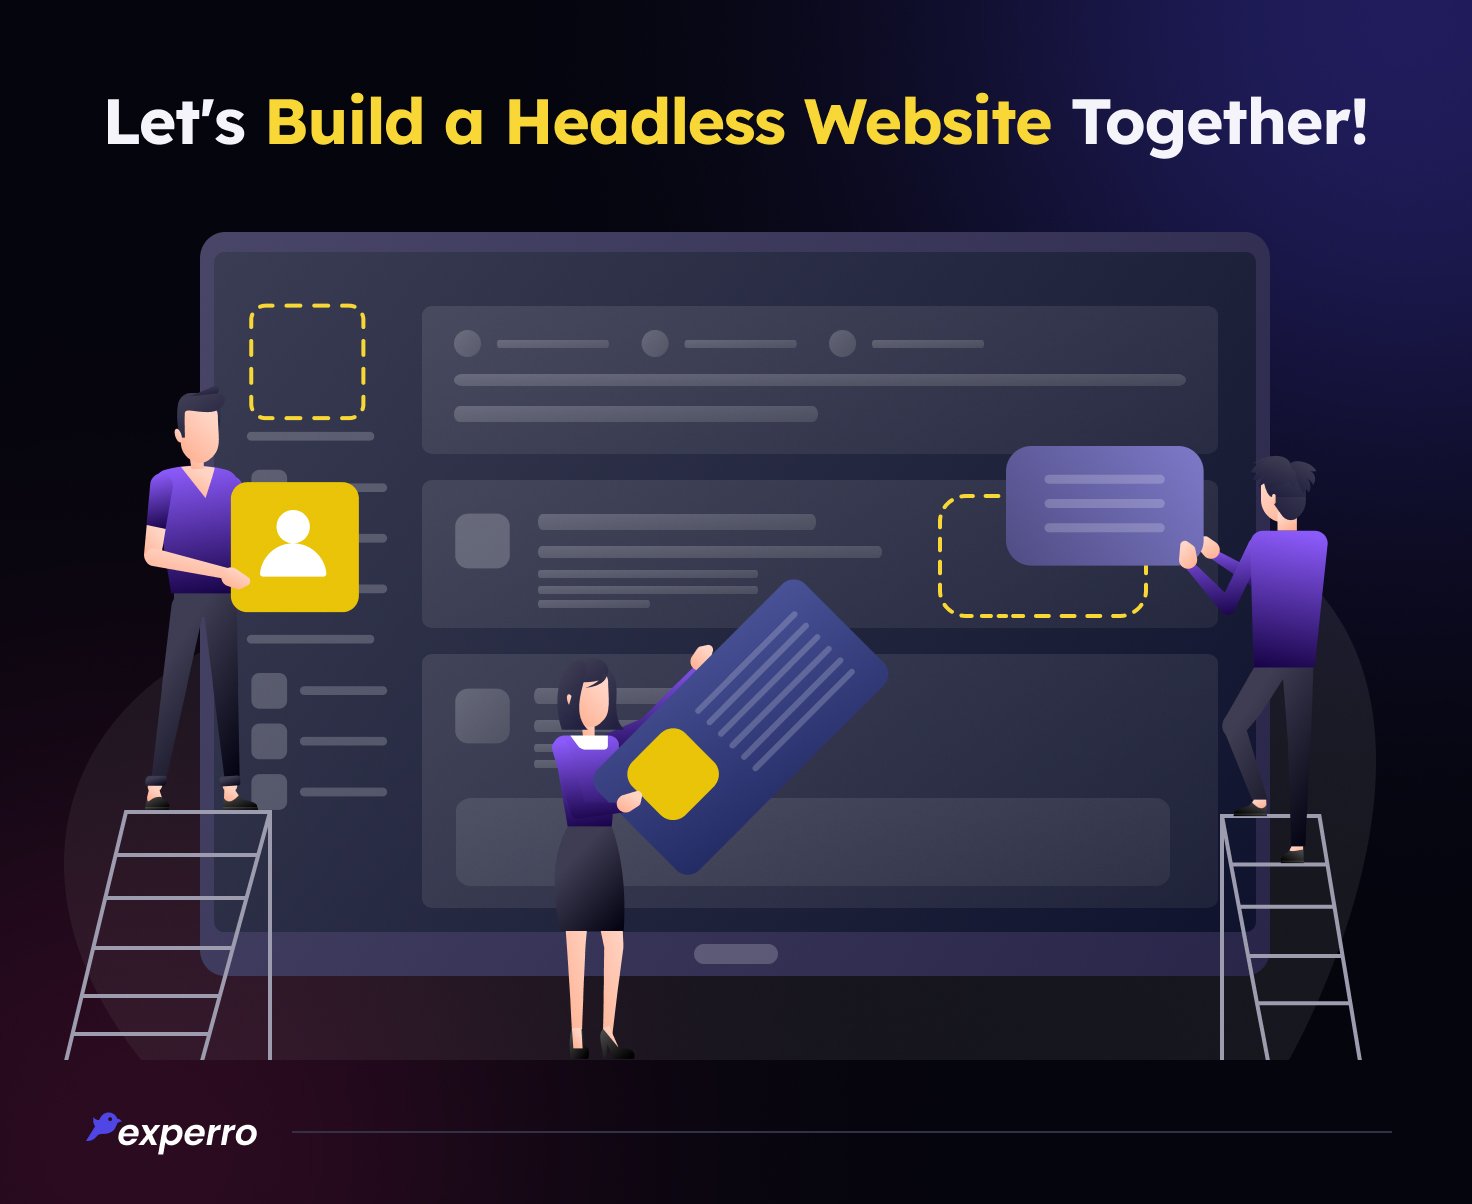 How to Start Building a Headless Website